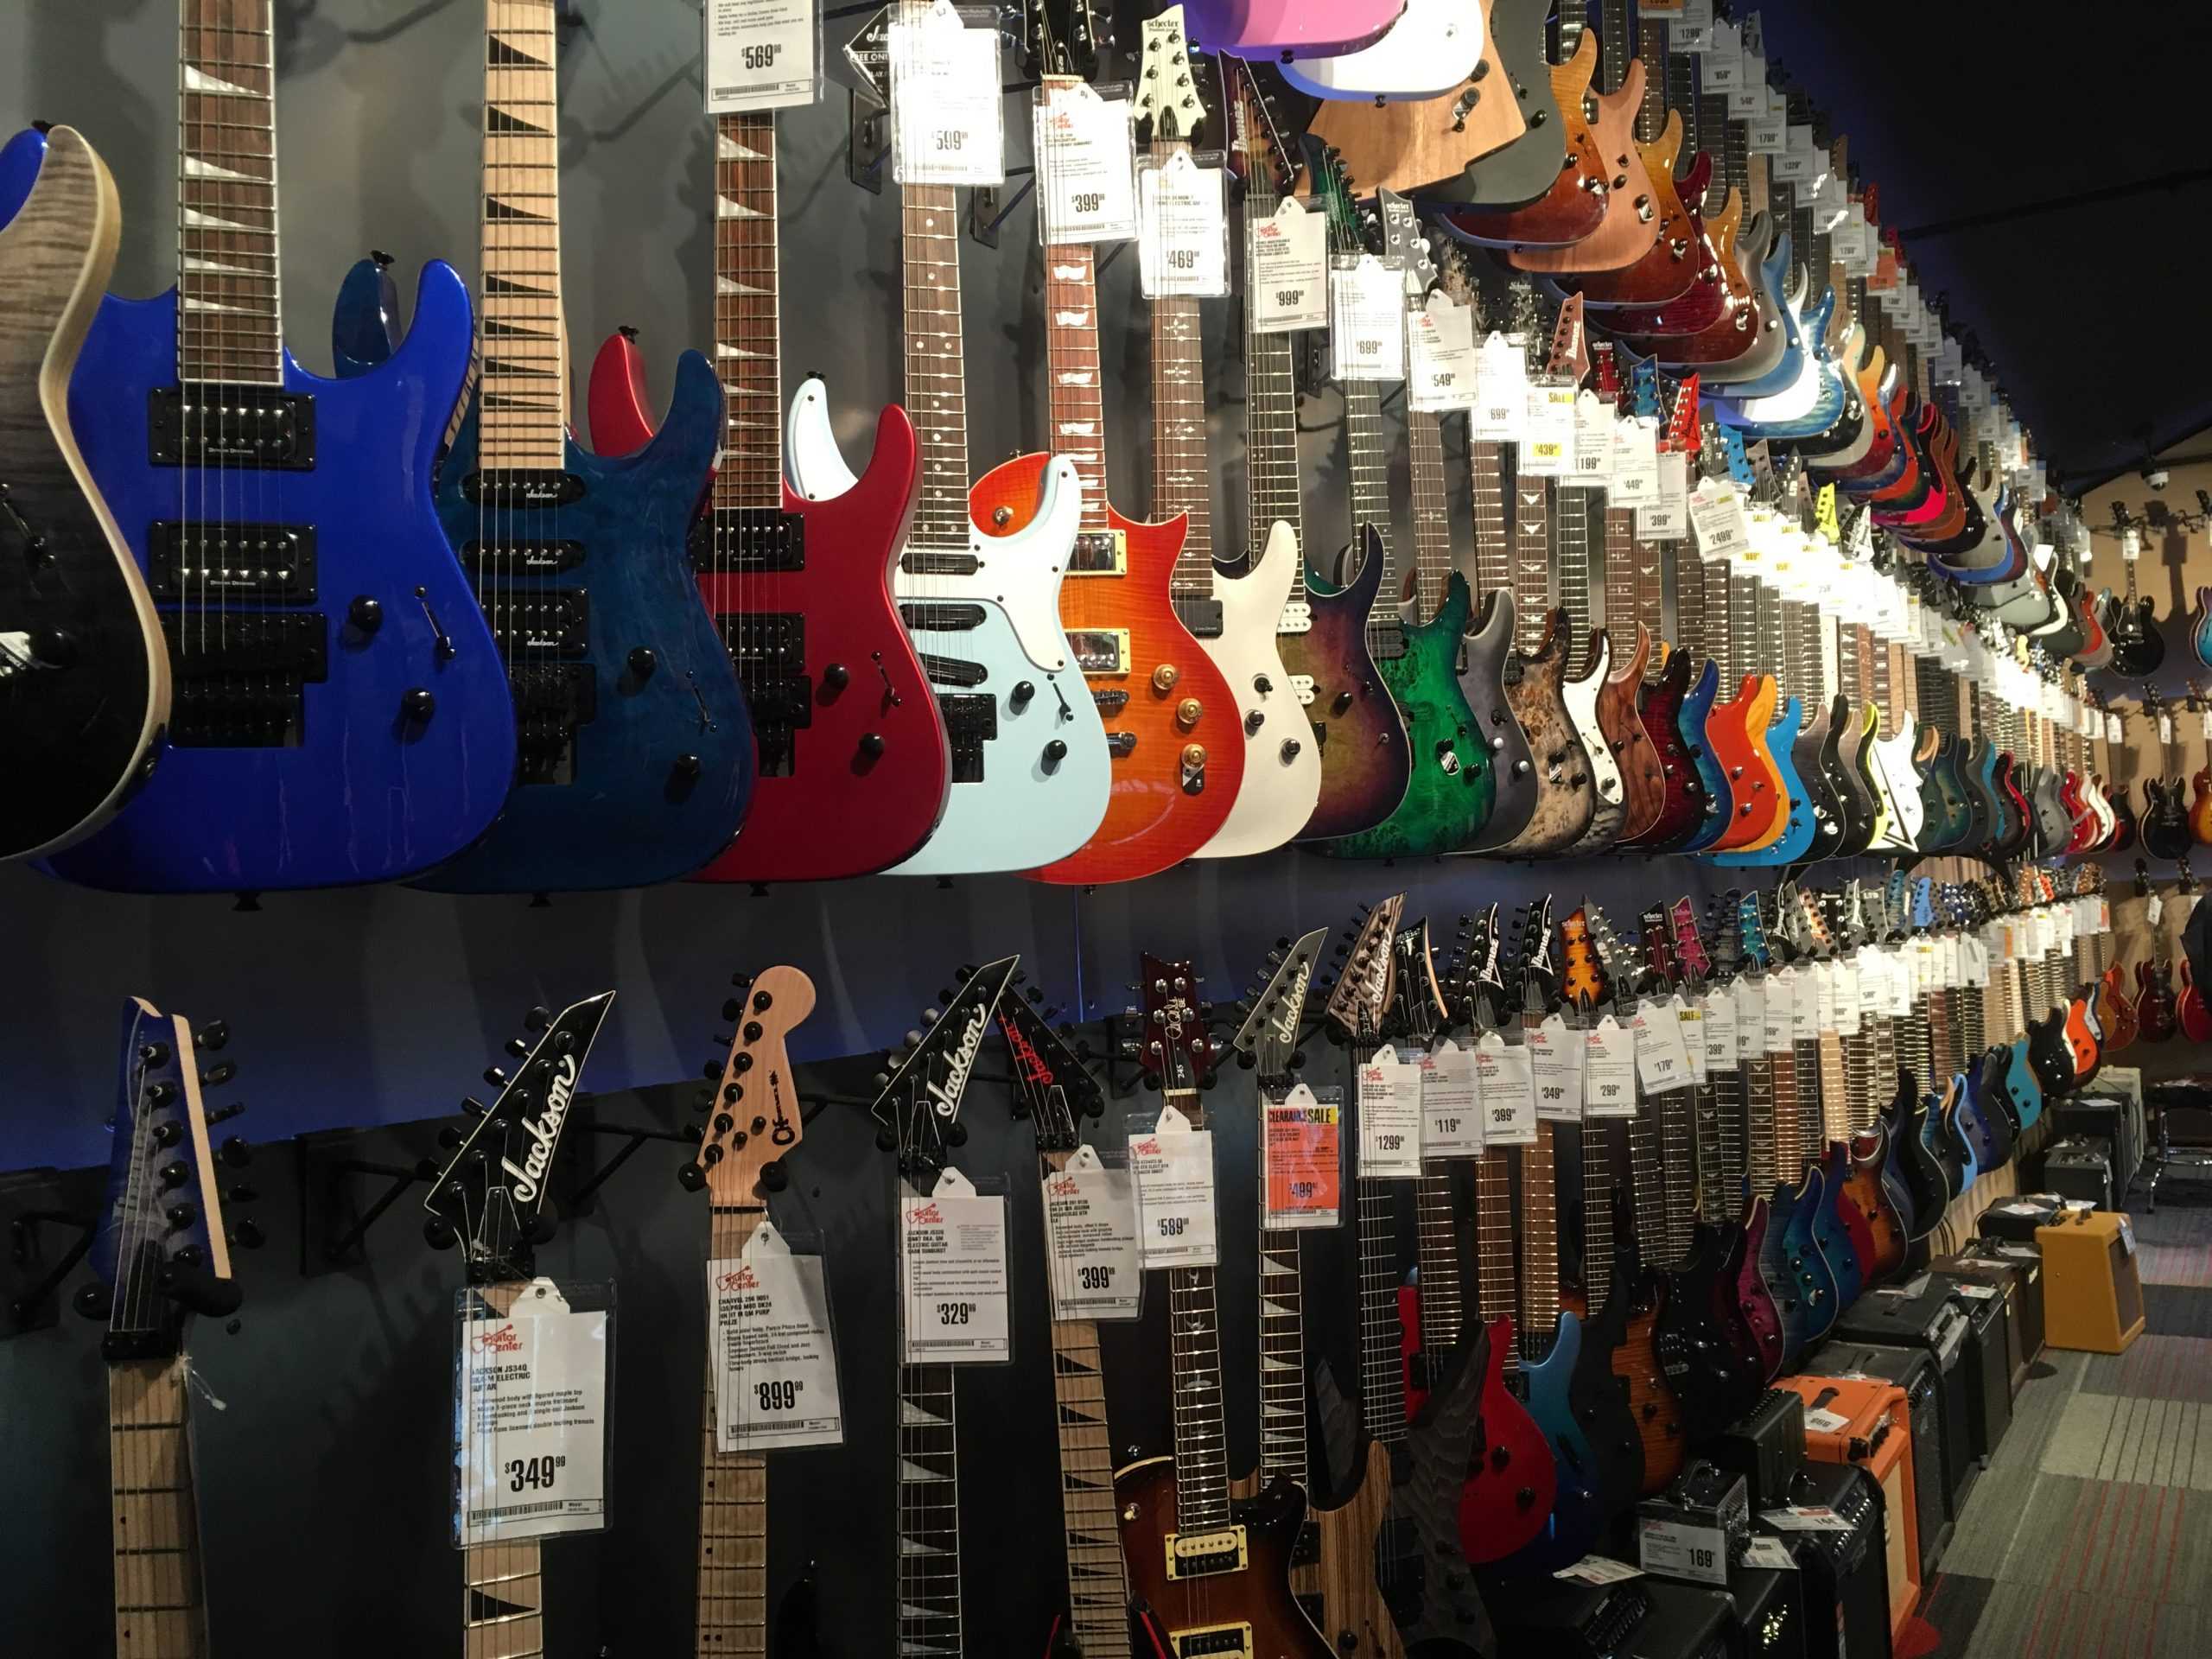 Wall of Guitars